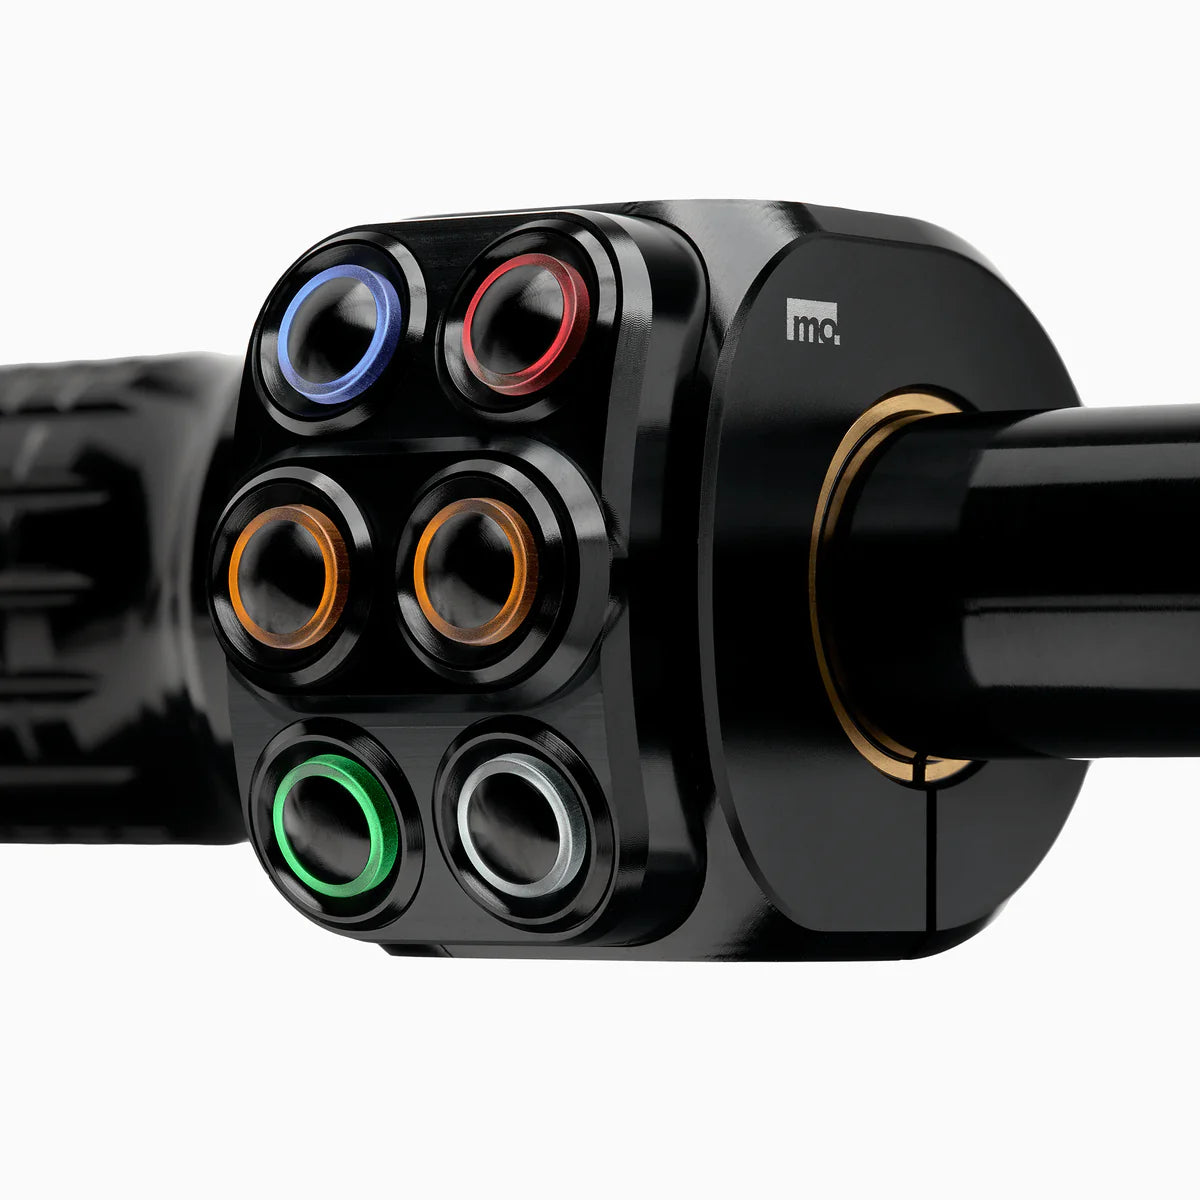 Motogadget Mo.switch pro LED handlebar controls motorcycle caferacer